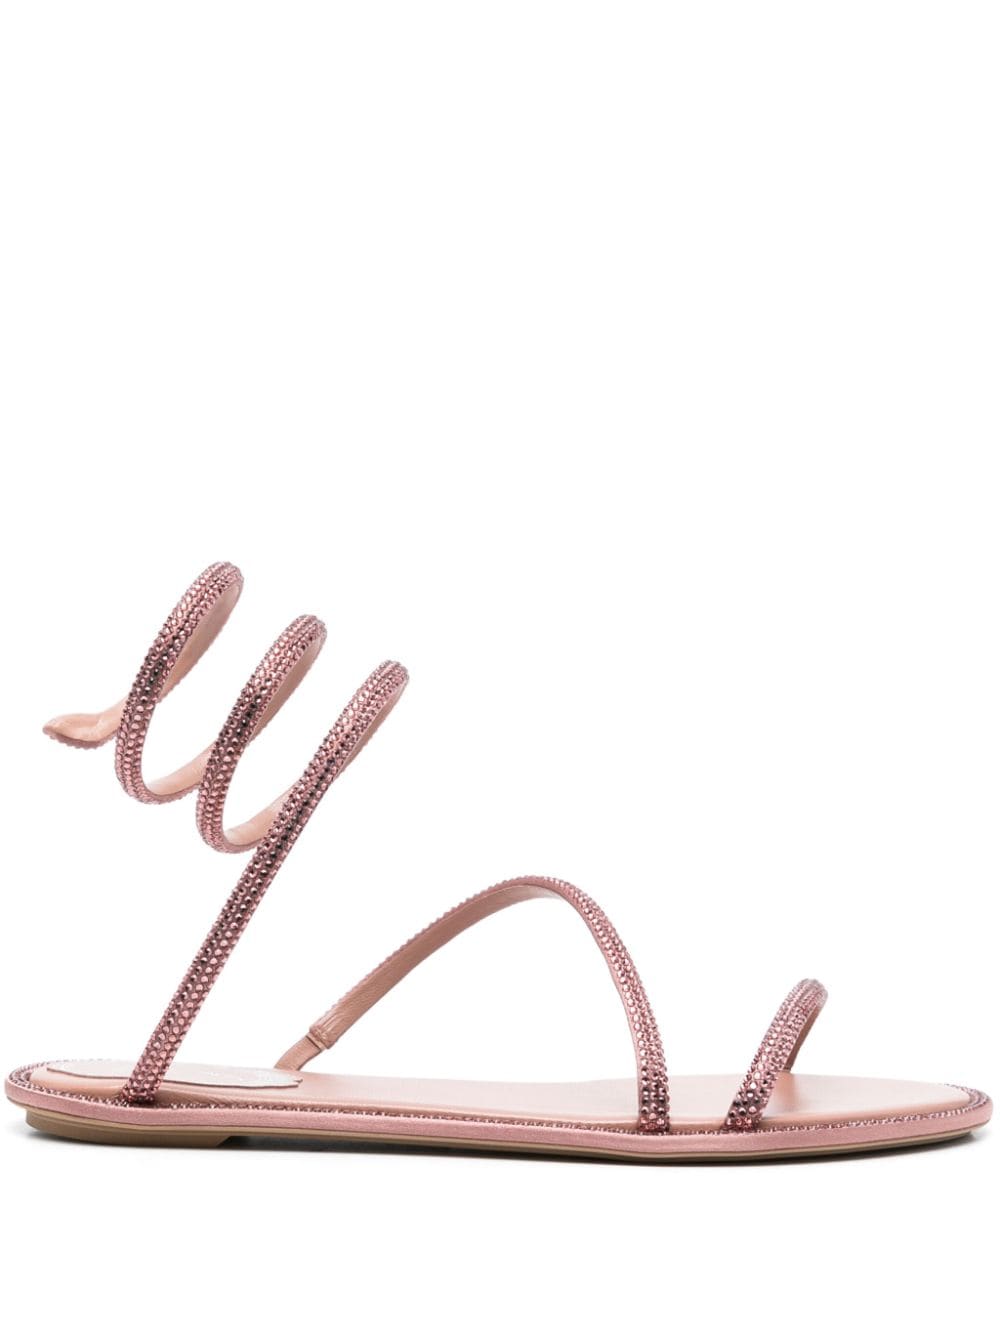 René Caovilla Cleo crystal-embellished sandals - Pink von René Caovilla